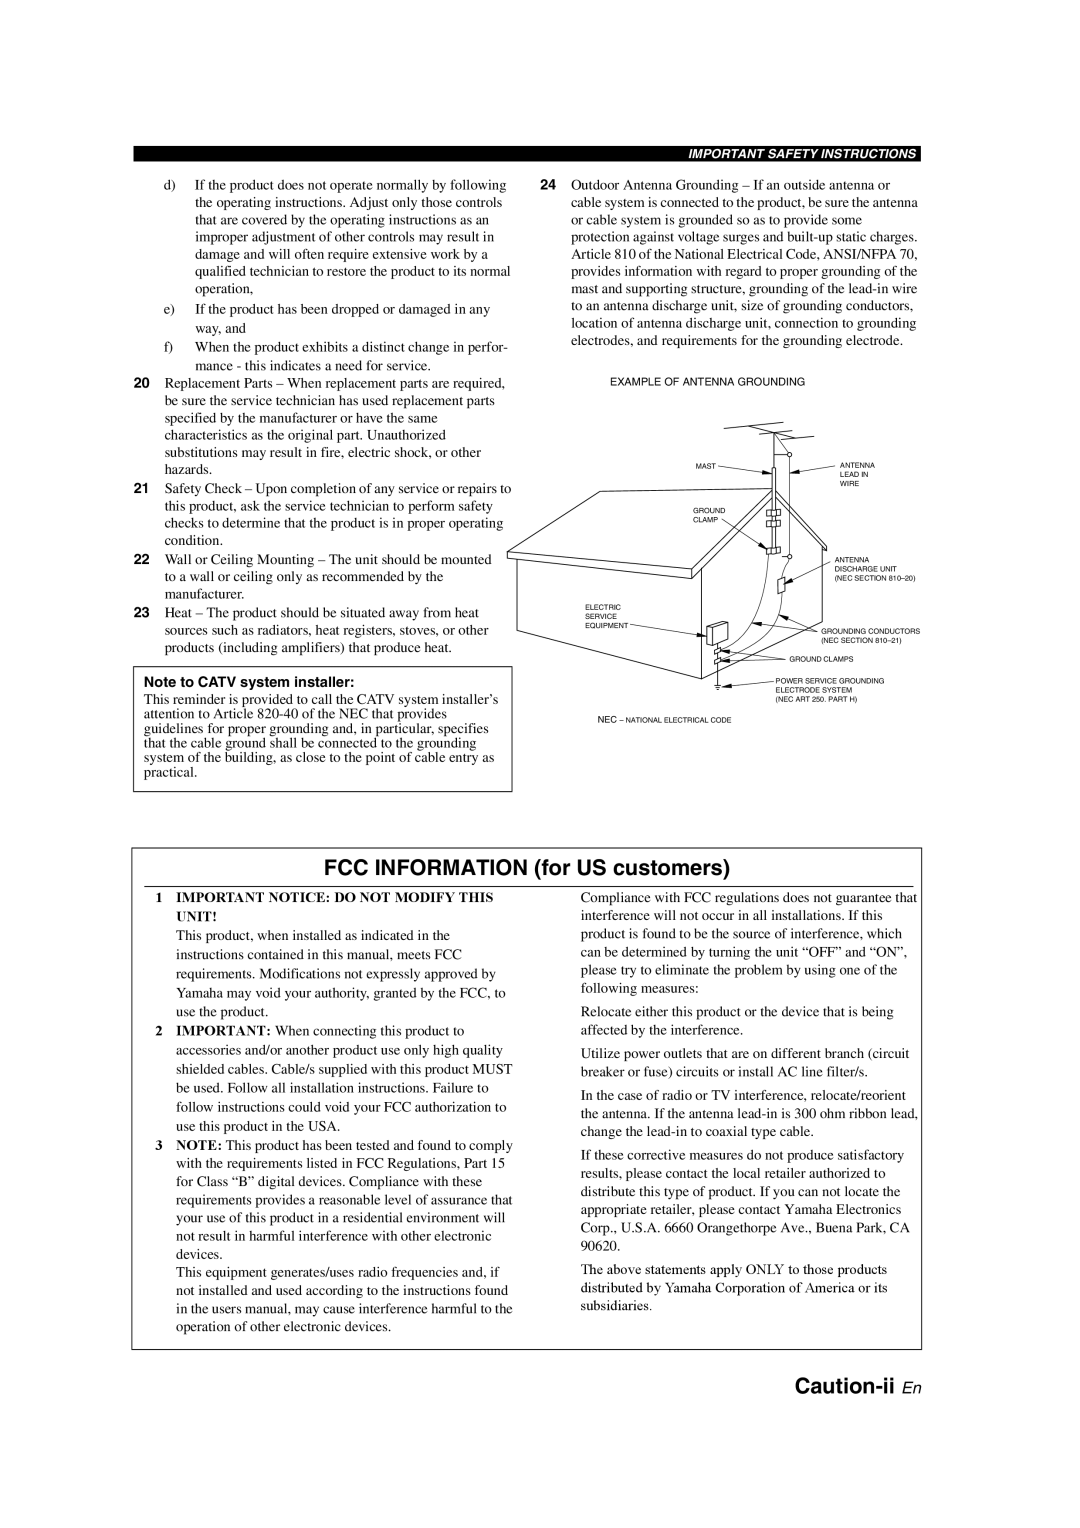 Yamaha RX-V463 owner manual FCC INFORMATION for US customers, Caution-ii En, Note to CATV system installer 